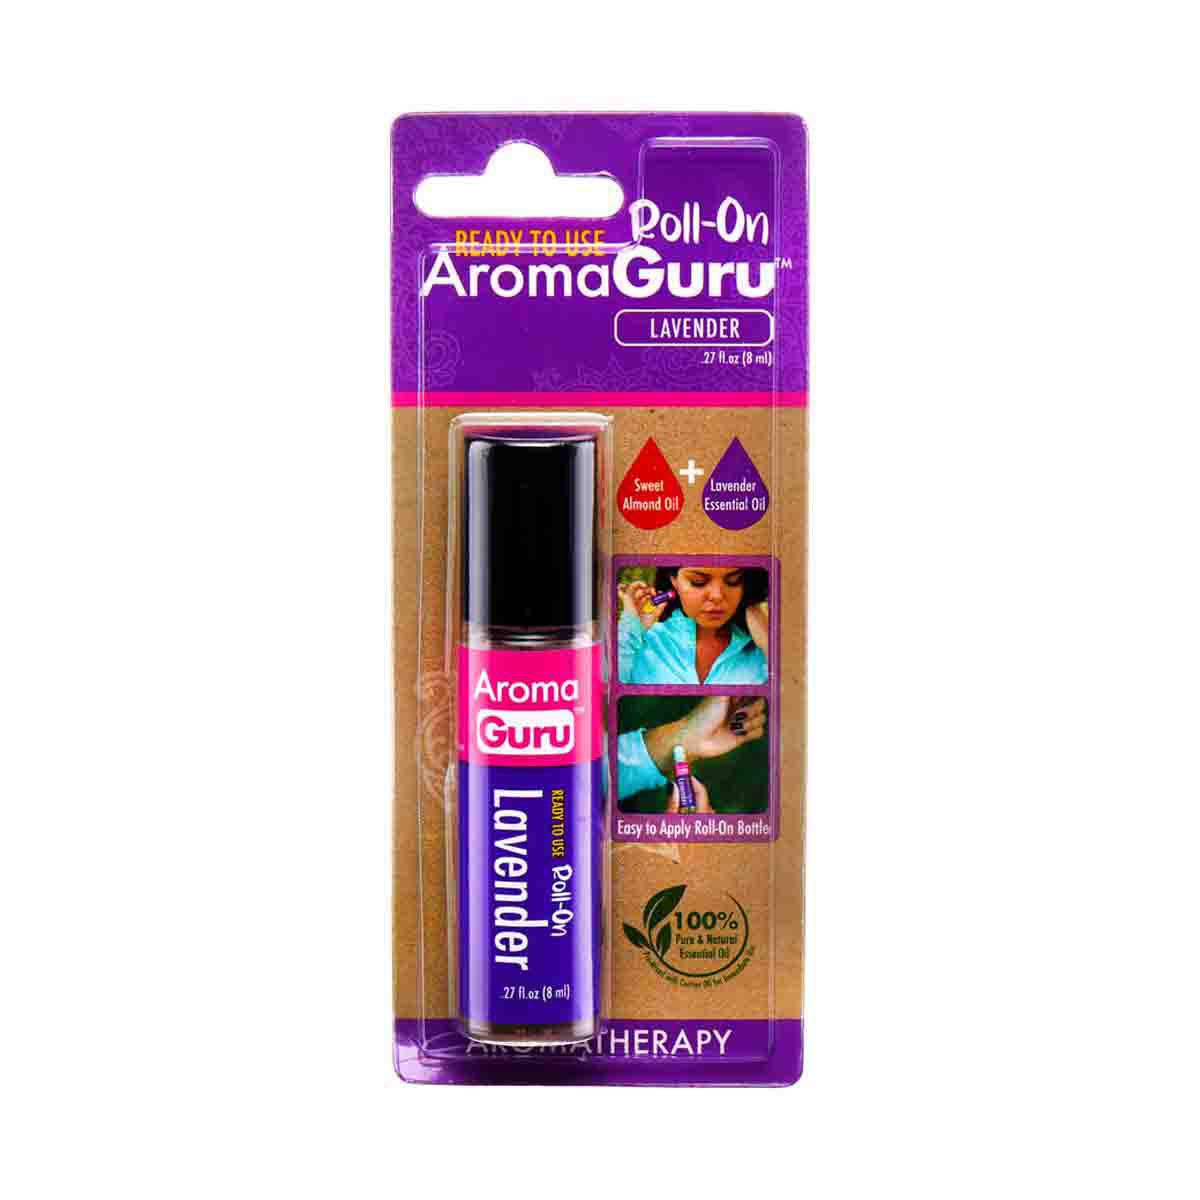 AromaGuru Roll-on Lavender Essential Oil, 0.27 fl. oz.